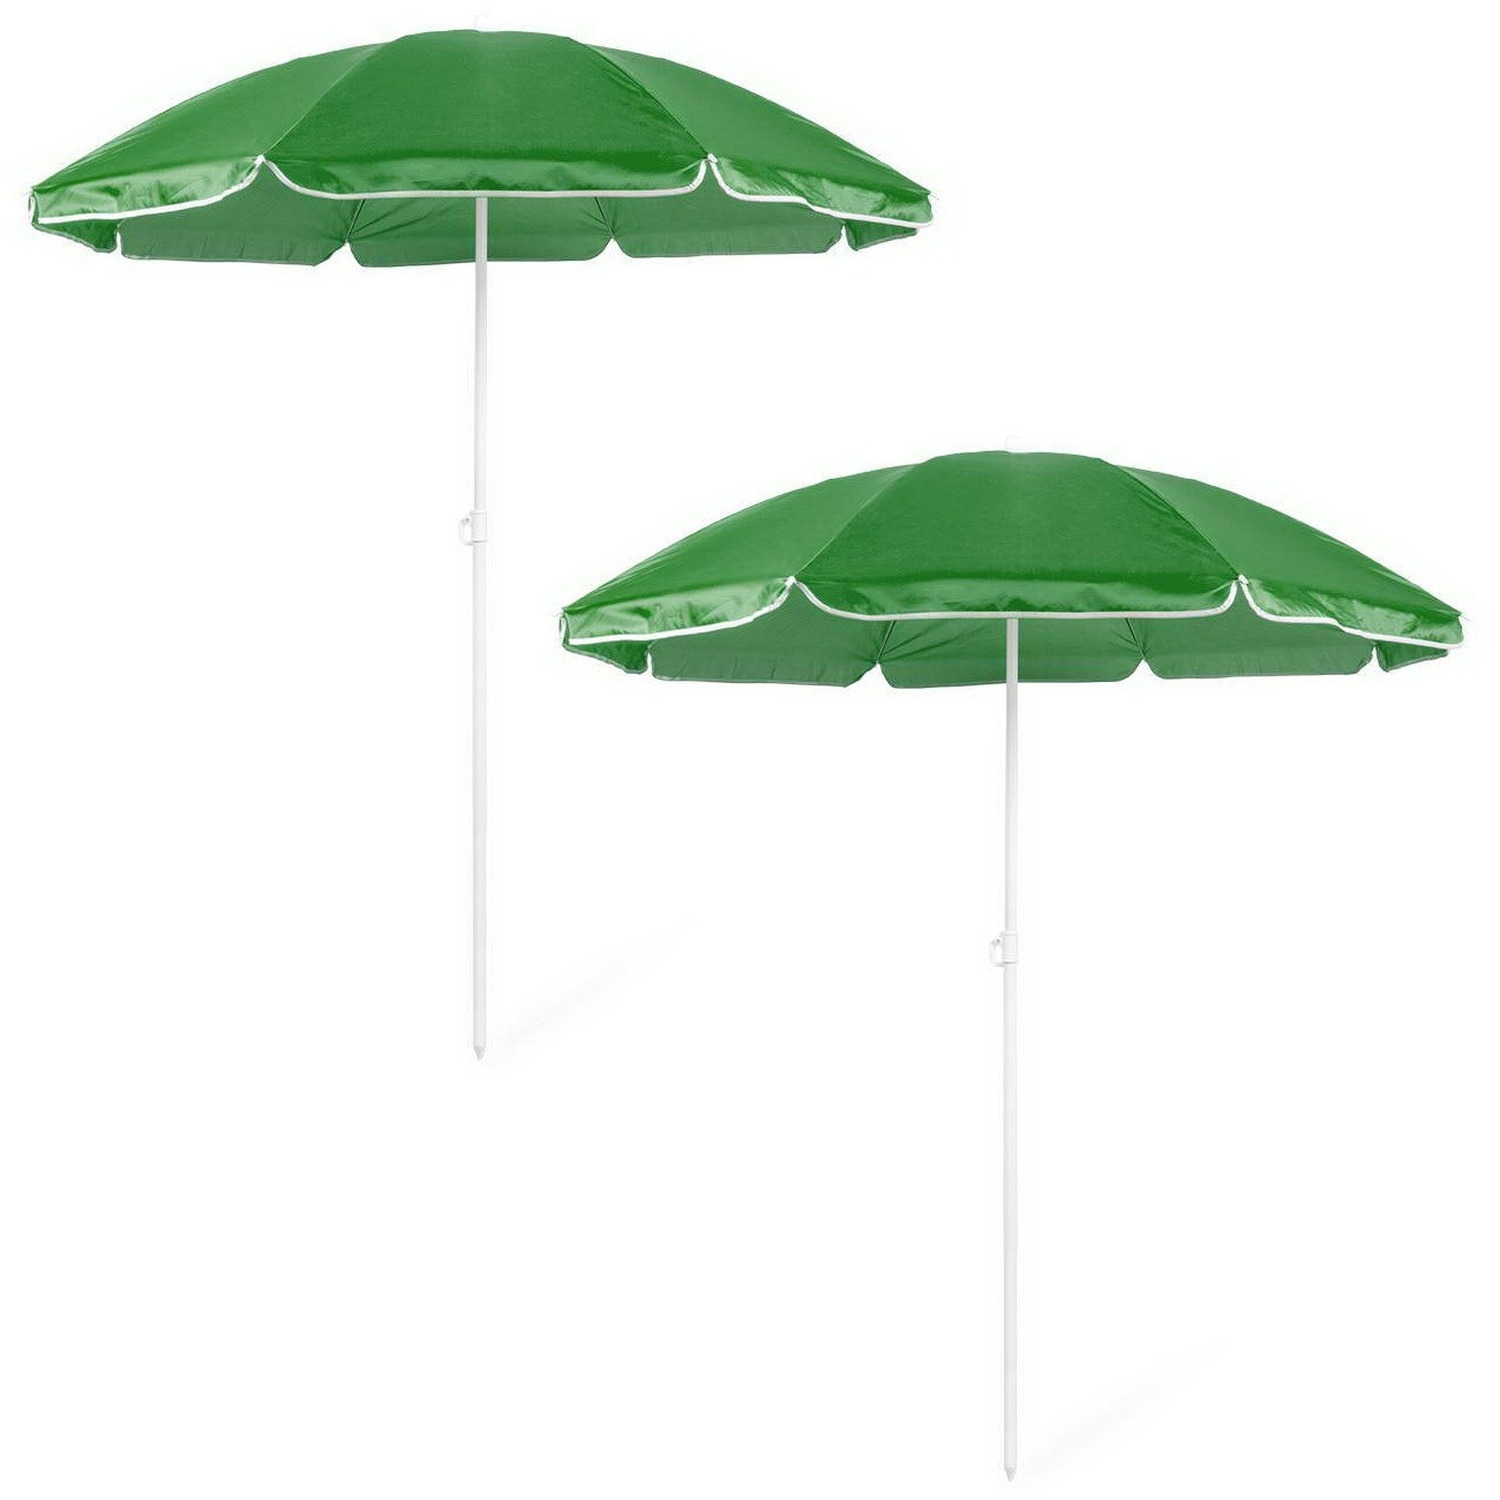 2x Groene strand parasols van nylon 150 cm